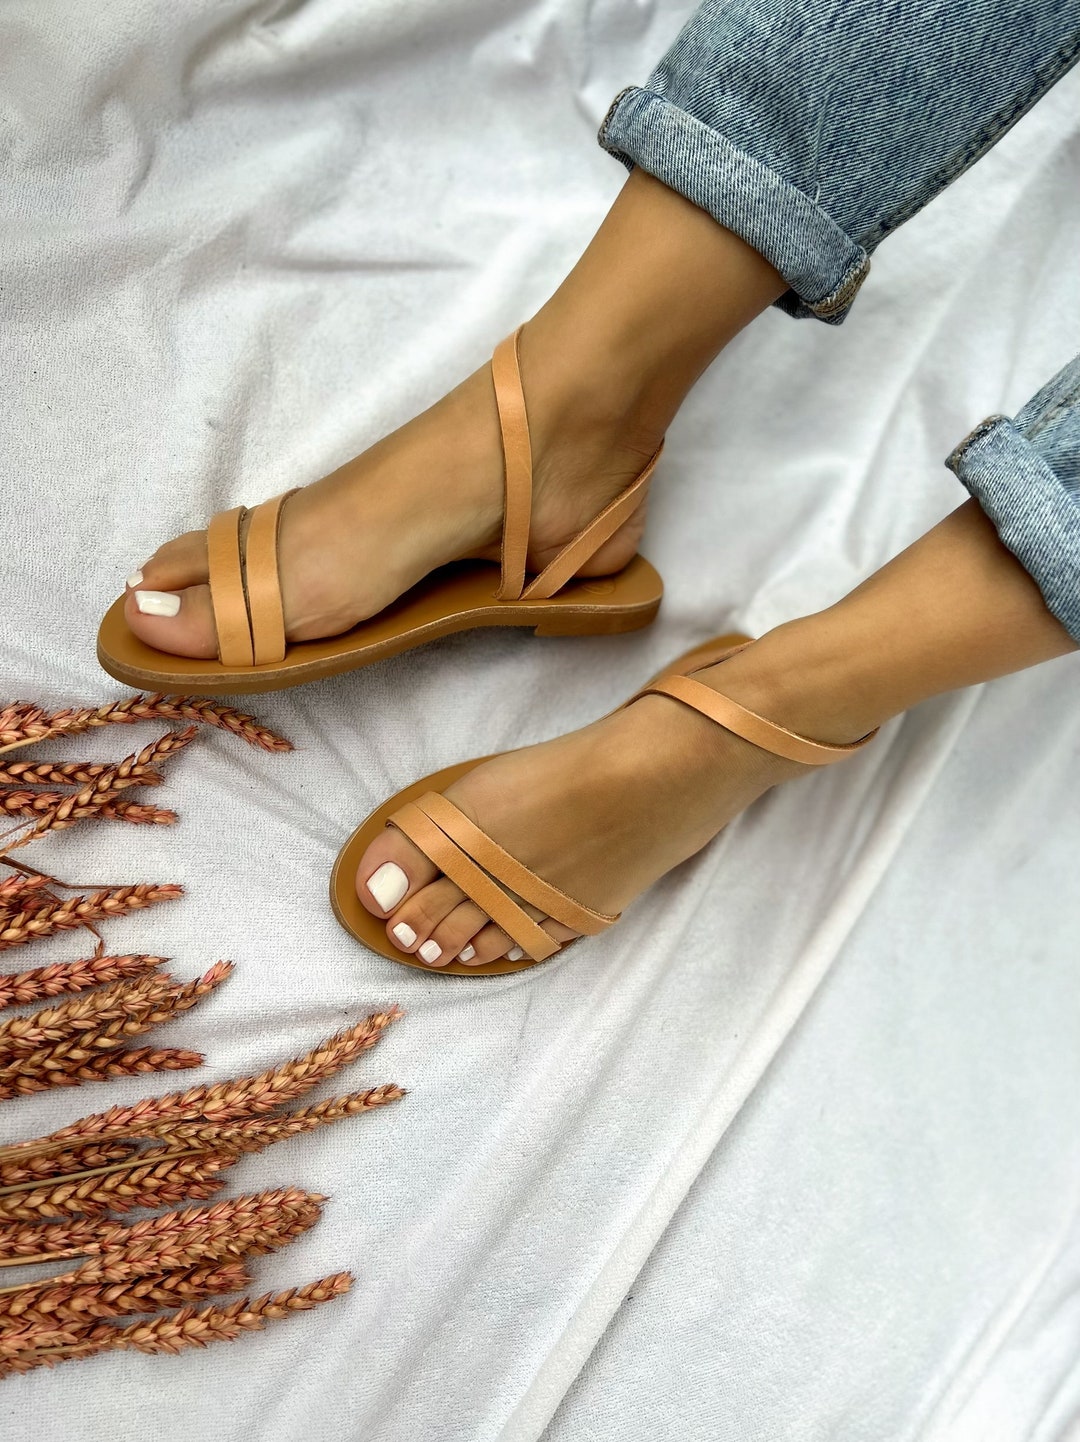 Brown Leather Sandals Greek Gladiator Sandals Summer Shoes 